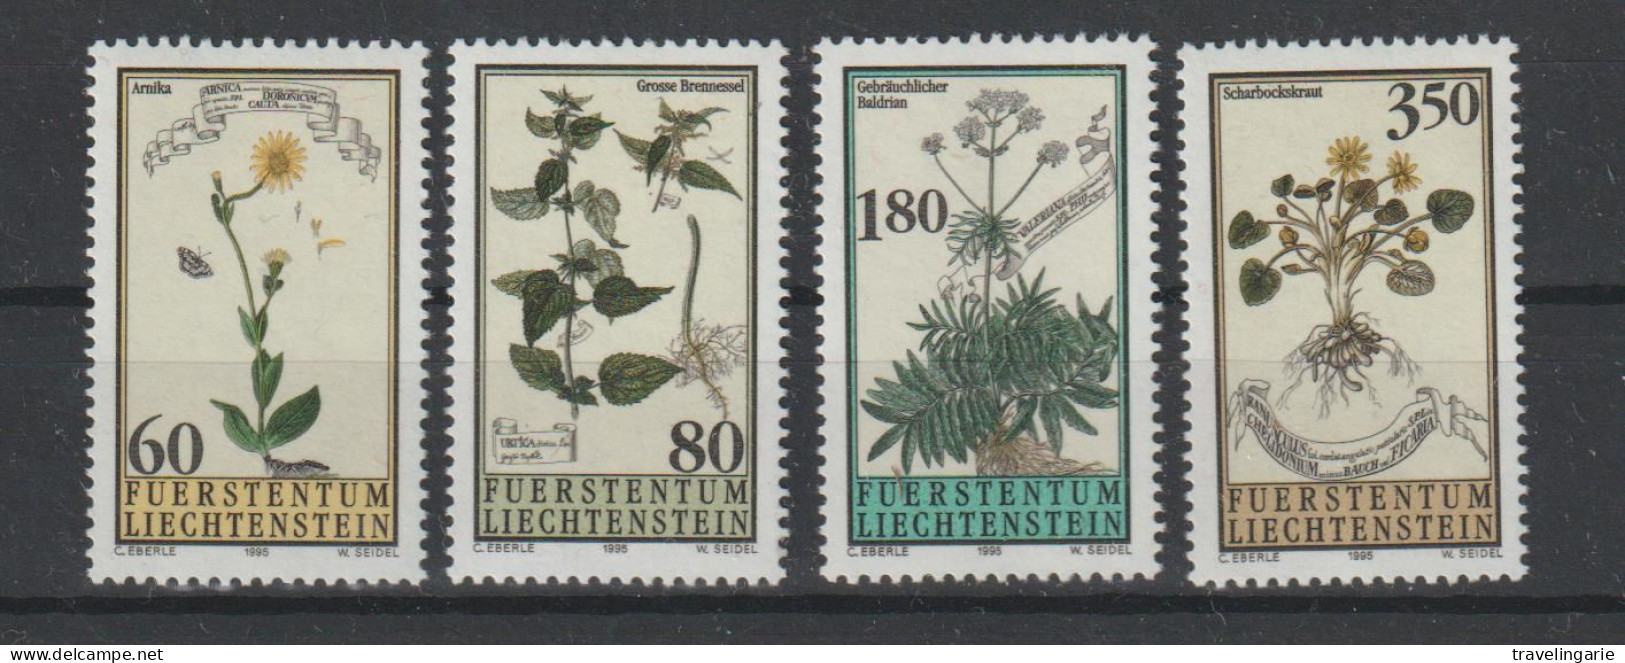 Liechtenstein 1995 Neighborhood With Switzerland ** MNH - Unused Stamps